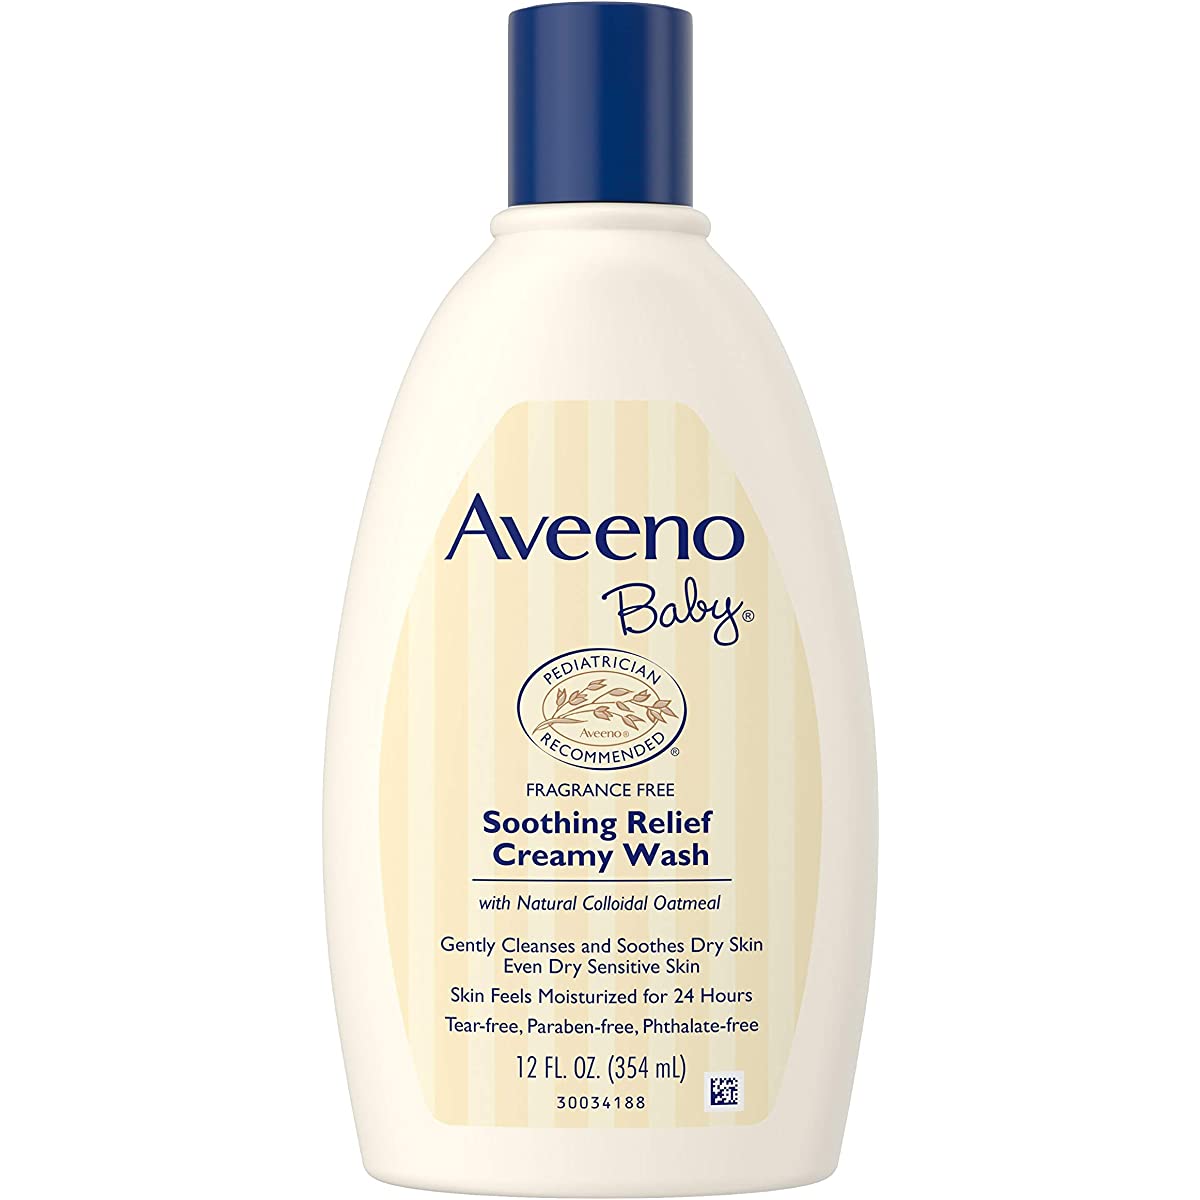 Aveeno Baby Soothing Relief Creamy Wash (354 ml) Aveeno Baby